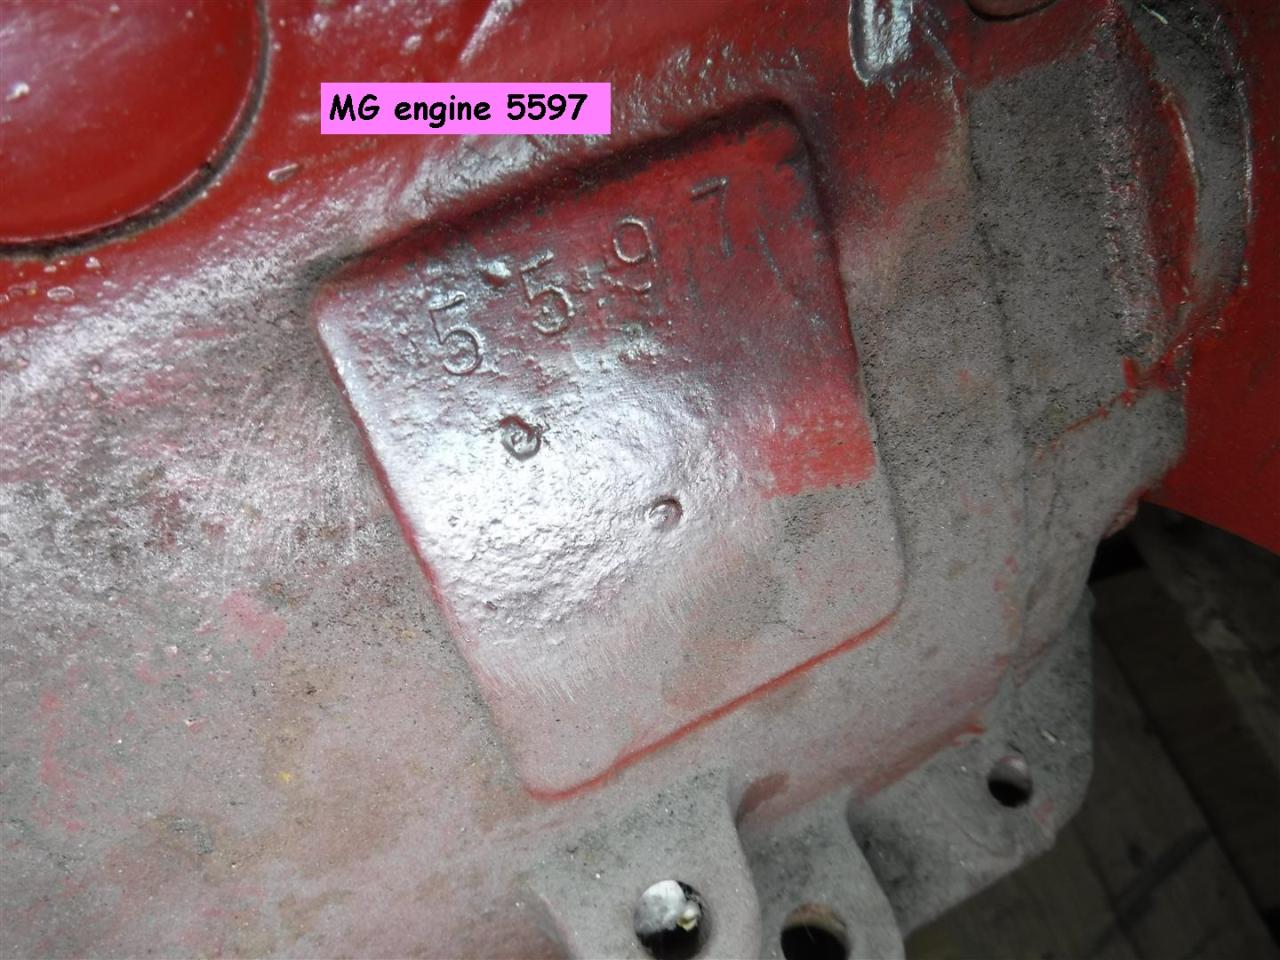 1900 MG engine 5597